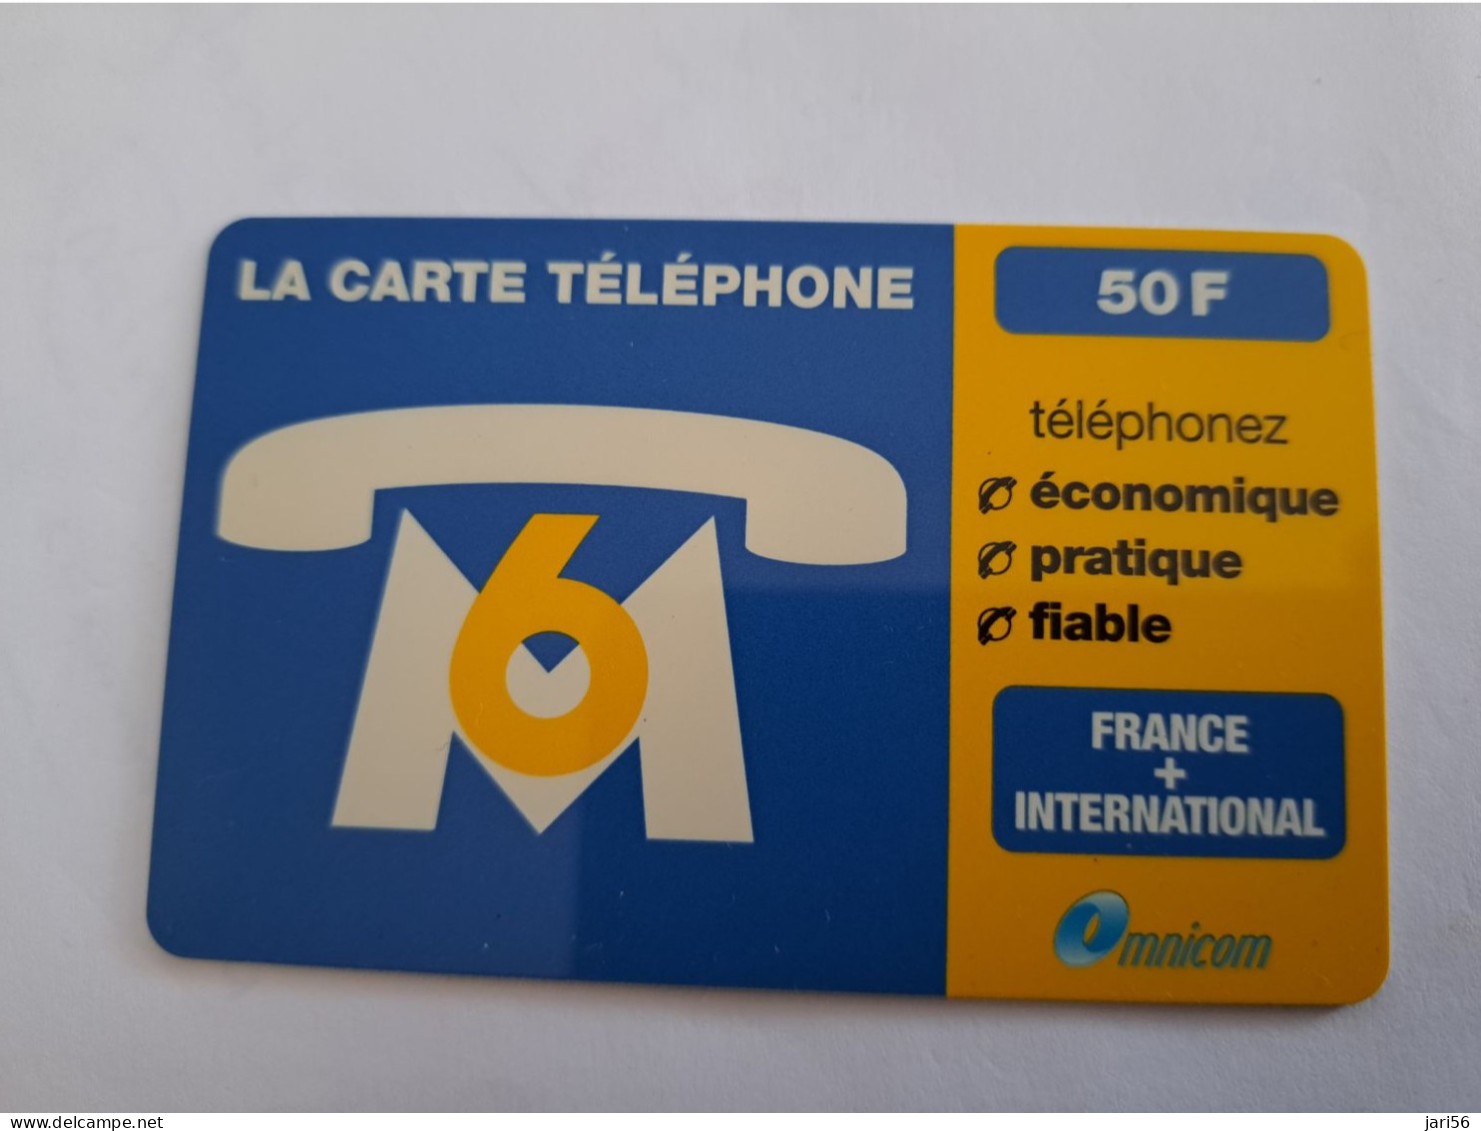 FRANCE/FRANKRIJK  / 50 UNITS / OMNICOM/ CARTE TELEPHONE  / PREPAID  USED    ** 14679** - Mobicartes (GSM/SIM)